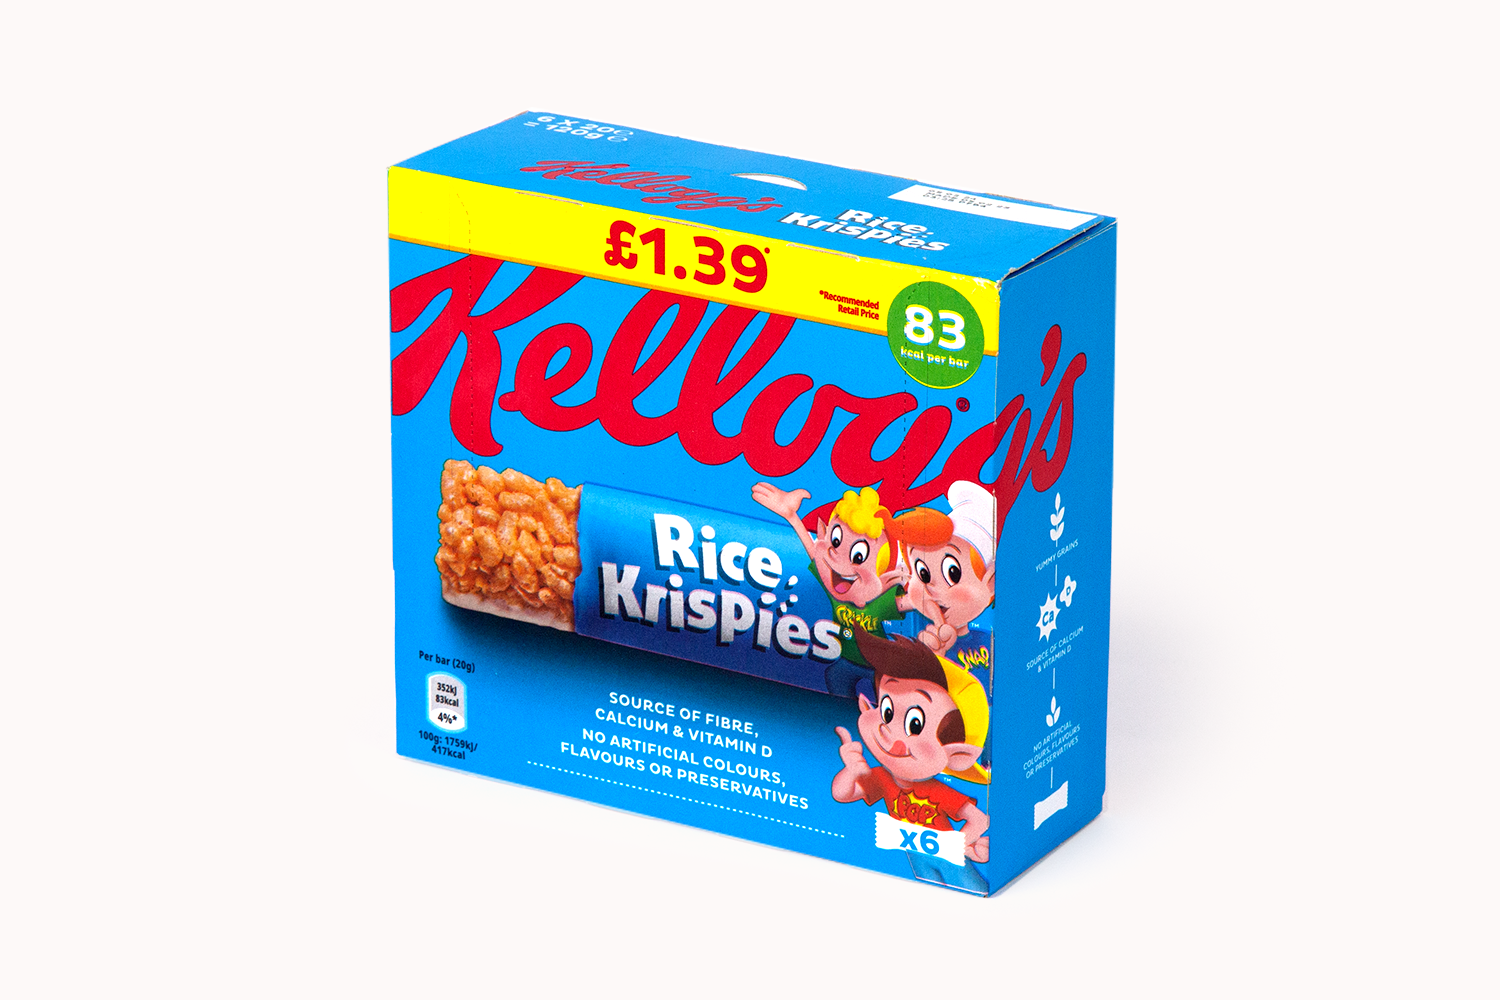 Kellogg's Rice Krispies Cereal Bars